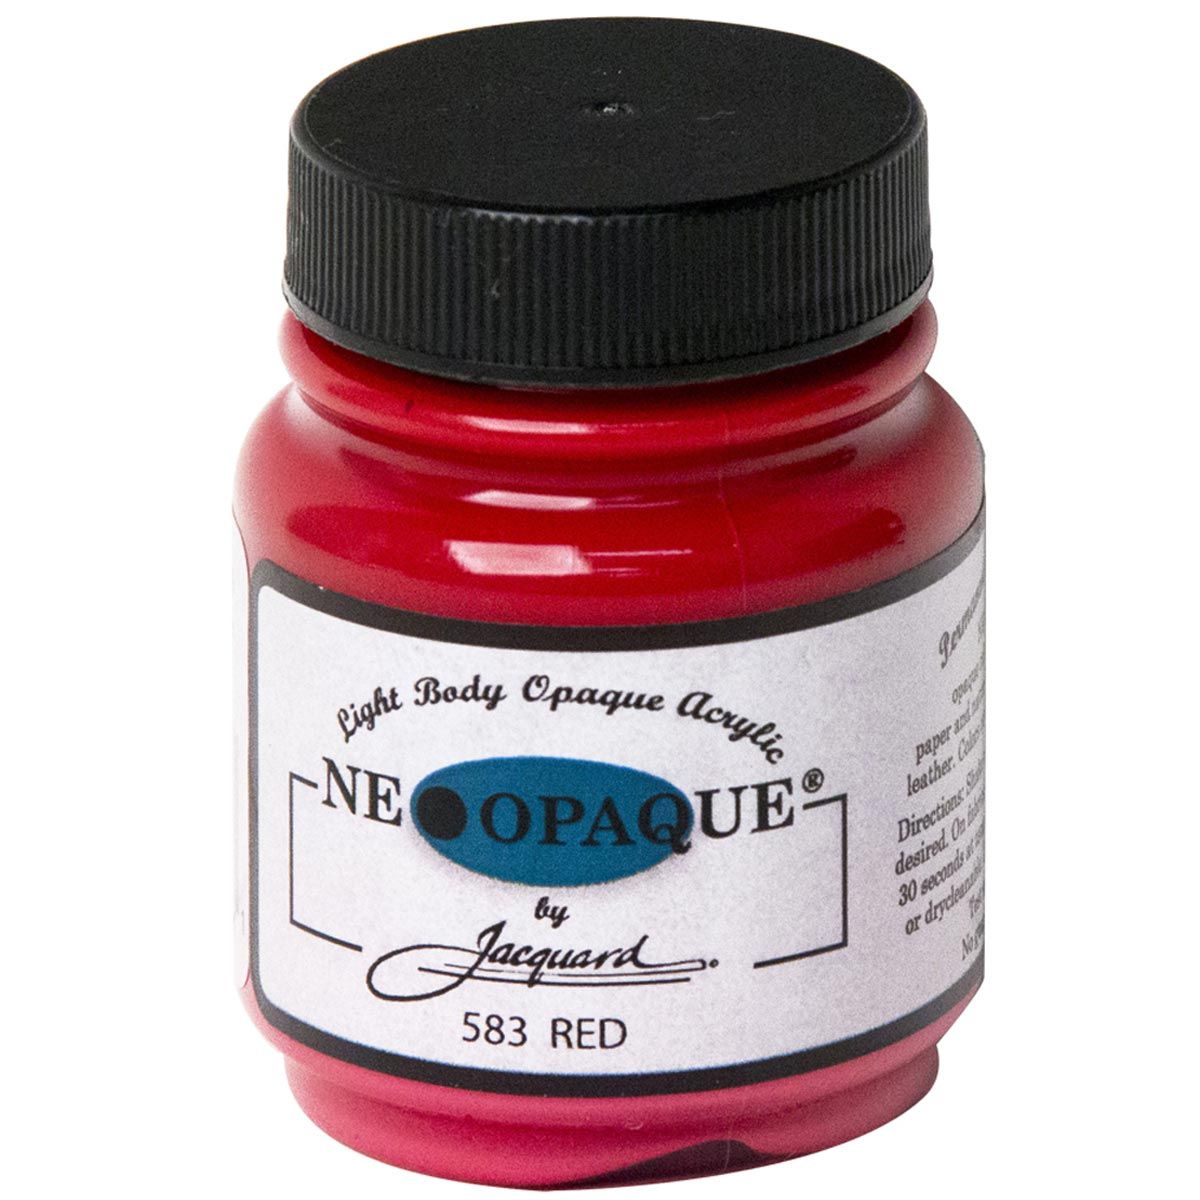 Jacquard Neopaque Acrylic 583 Red 2.25 oz